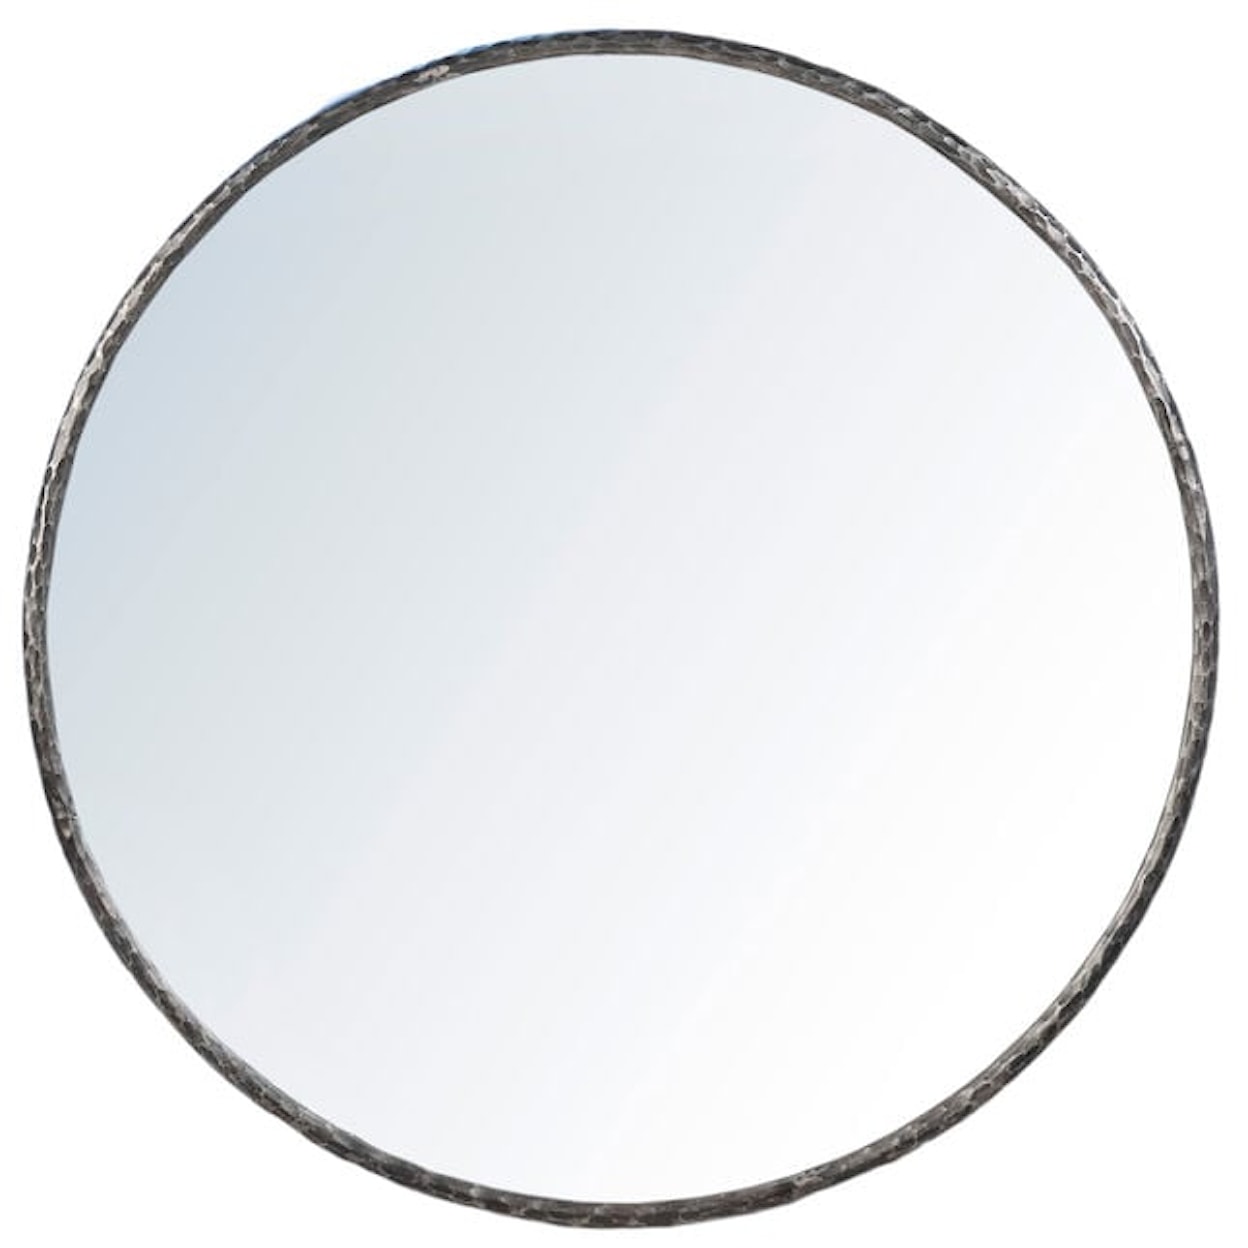 Dovetail Furniture Mirrors Wall Mirrors